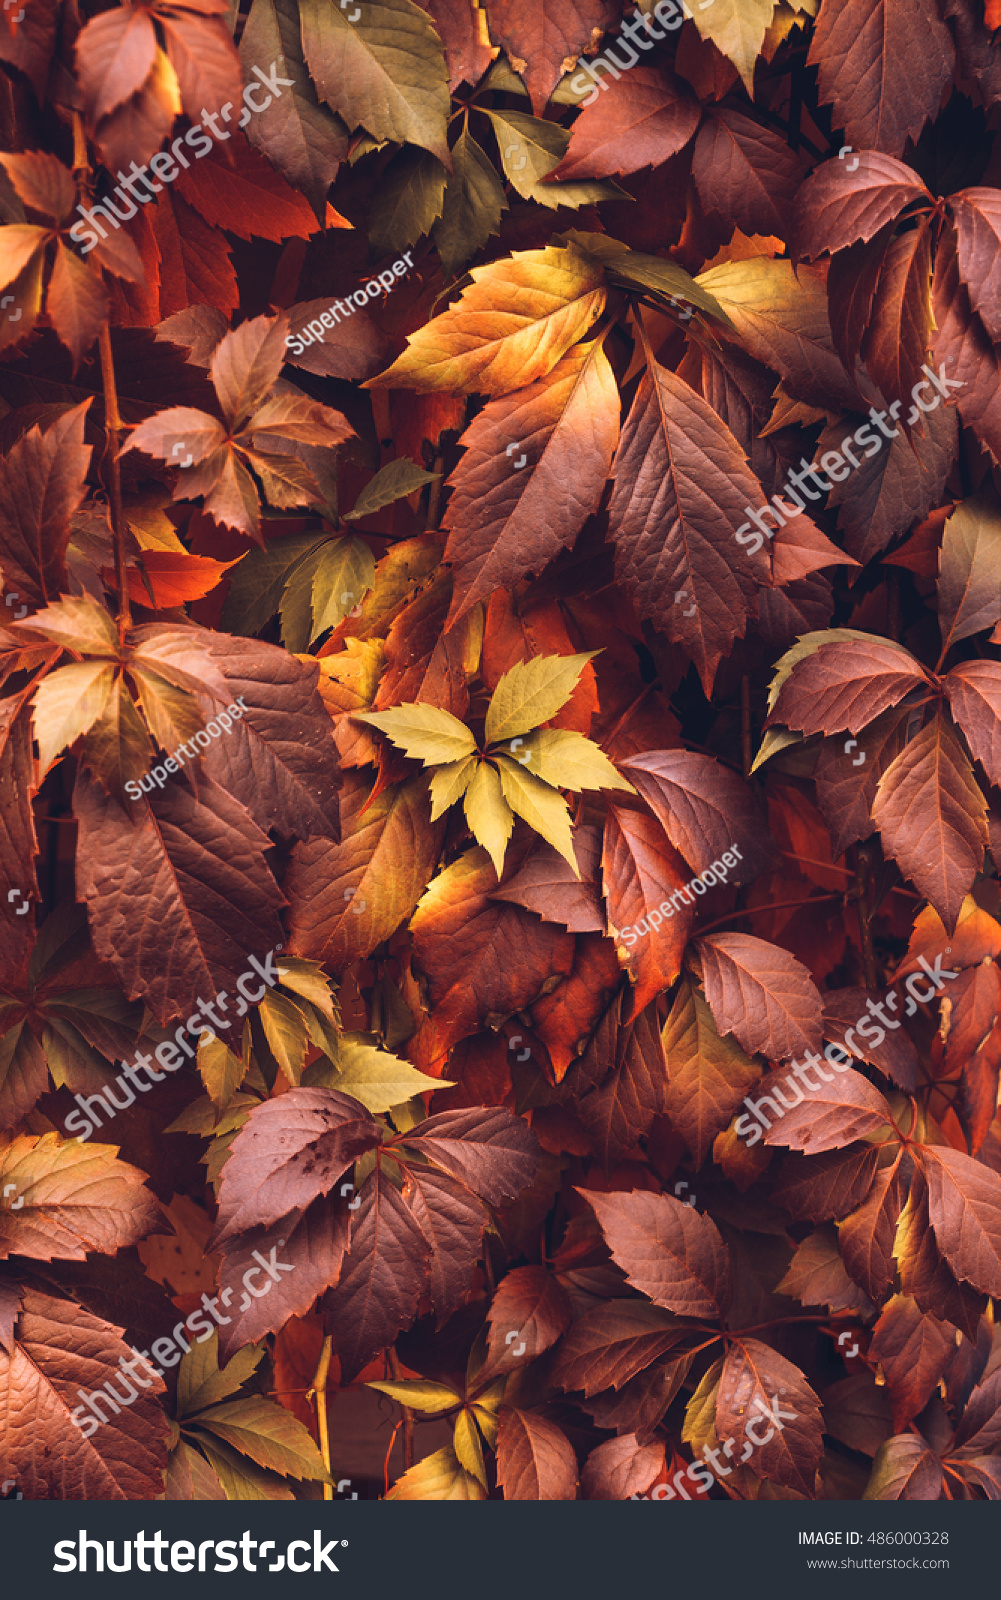 Close up of Autumn Virginia Creeper leaves, Macro of Autumn Wild Grape leaves, Colorful Leaves Of Creeper Plant As Fall Season Halloween Background #486000328